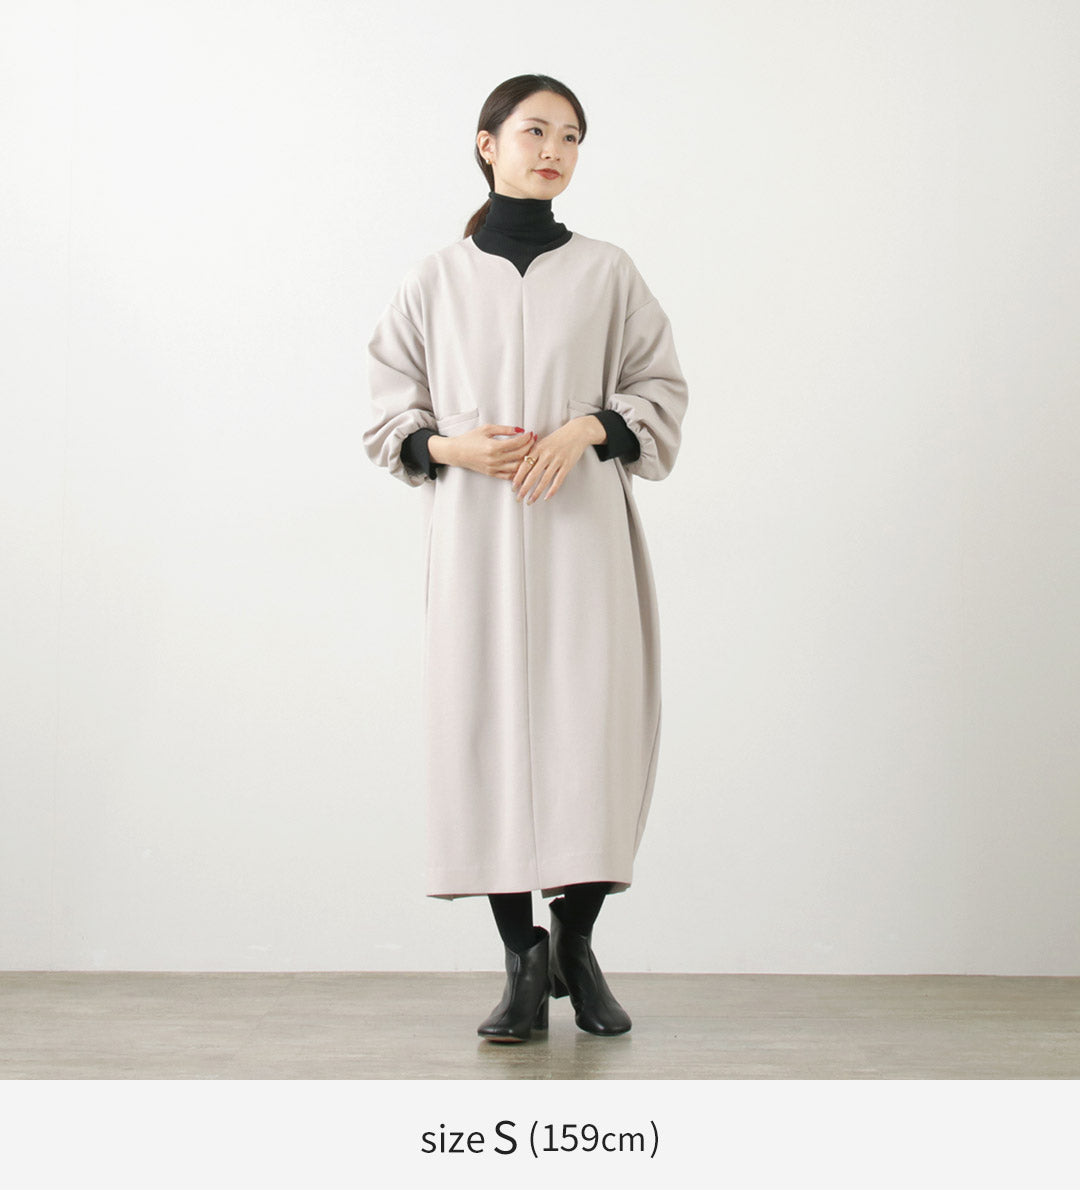 KELEN（ケレン） LECOL デザインネック ドレス / ワンピース ロング フォーマル オケージョン 入学式 卒業式 セレモニー きれいめ LECOL Design Neck Dress